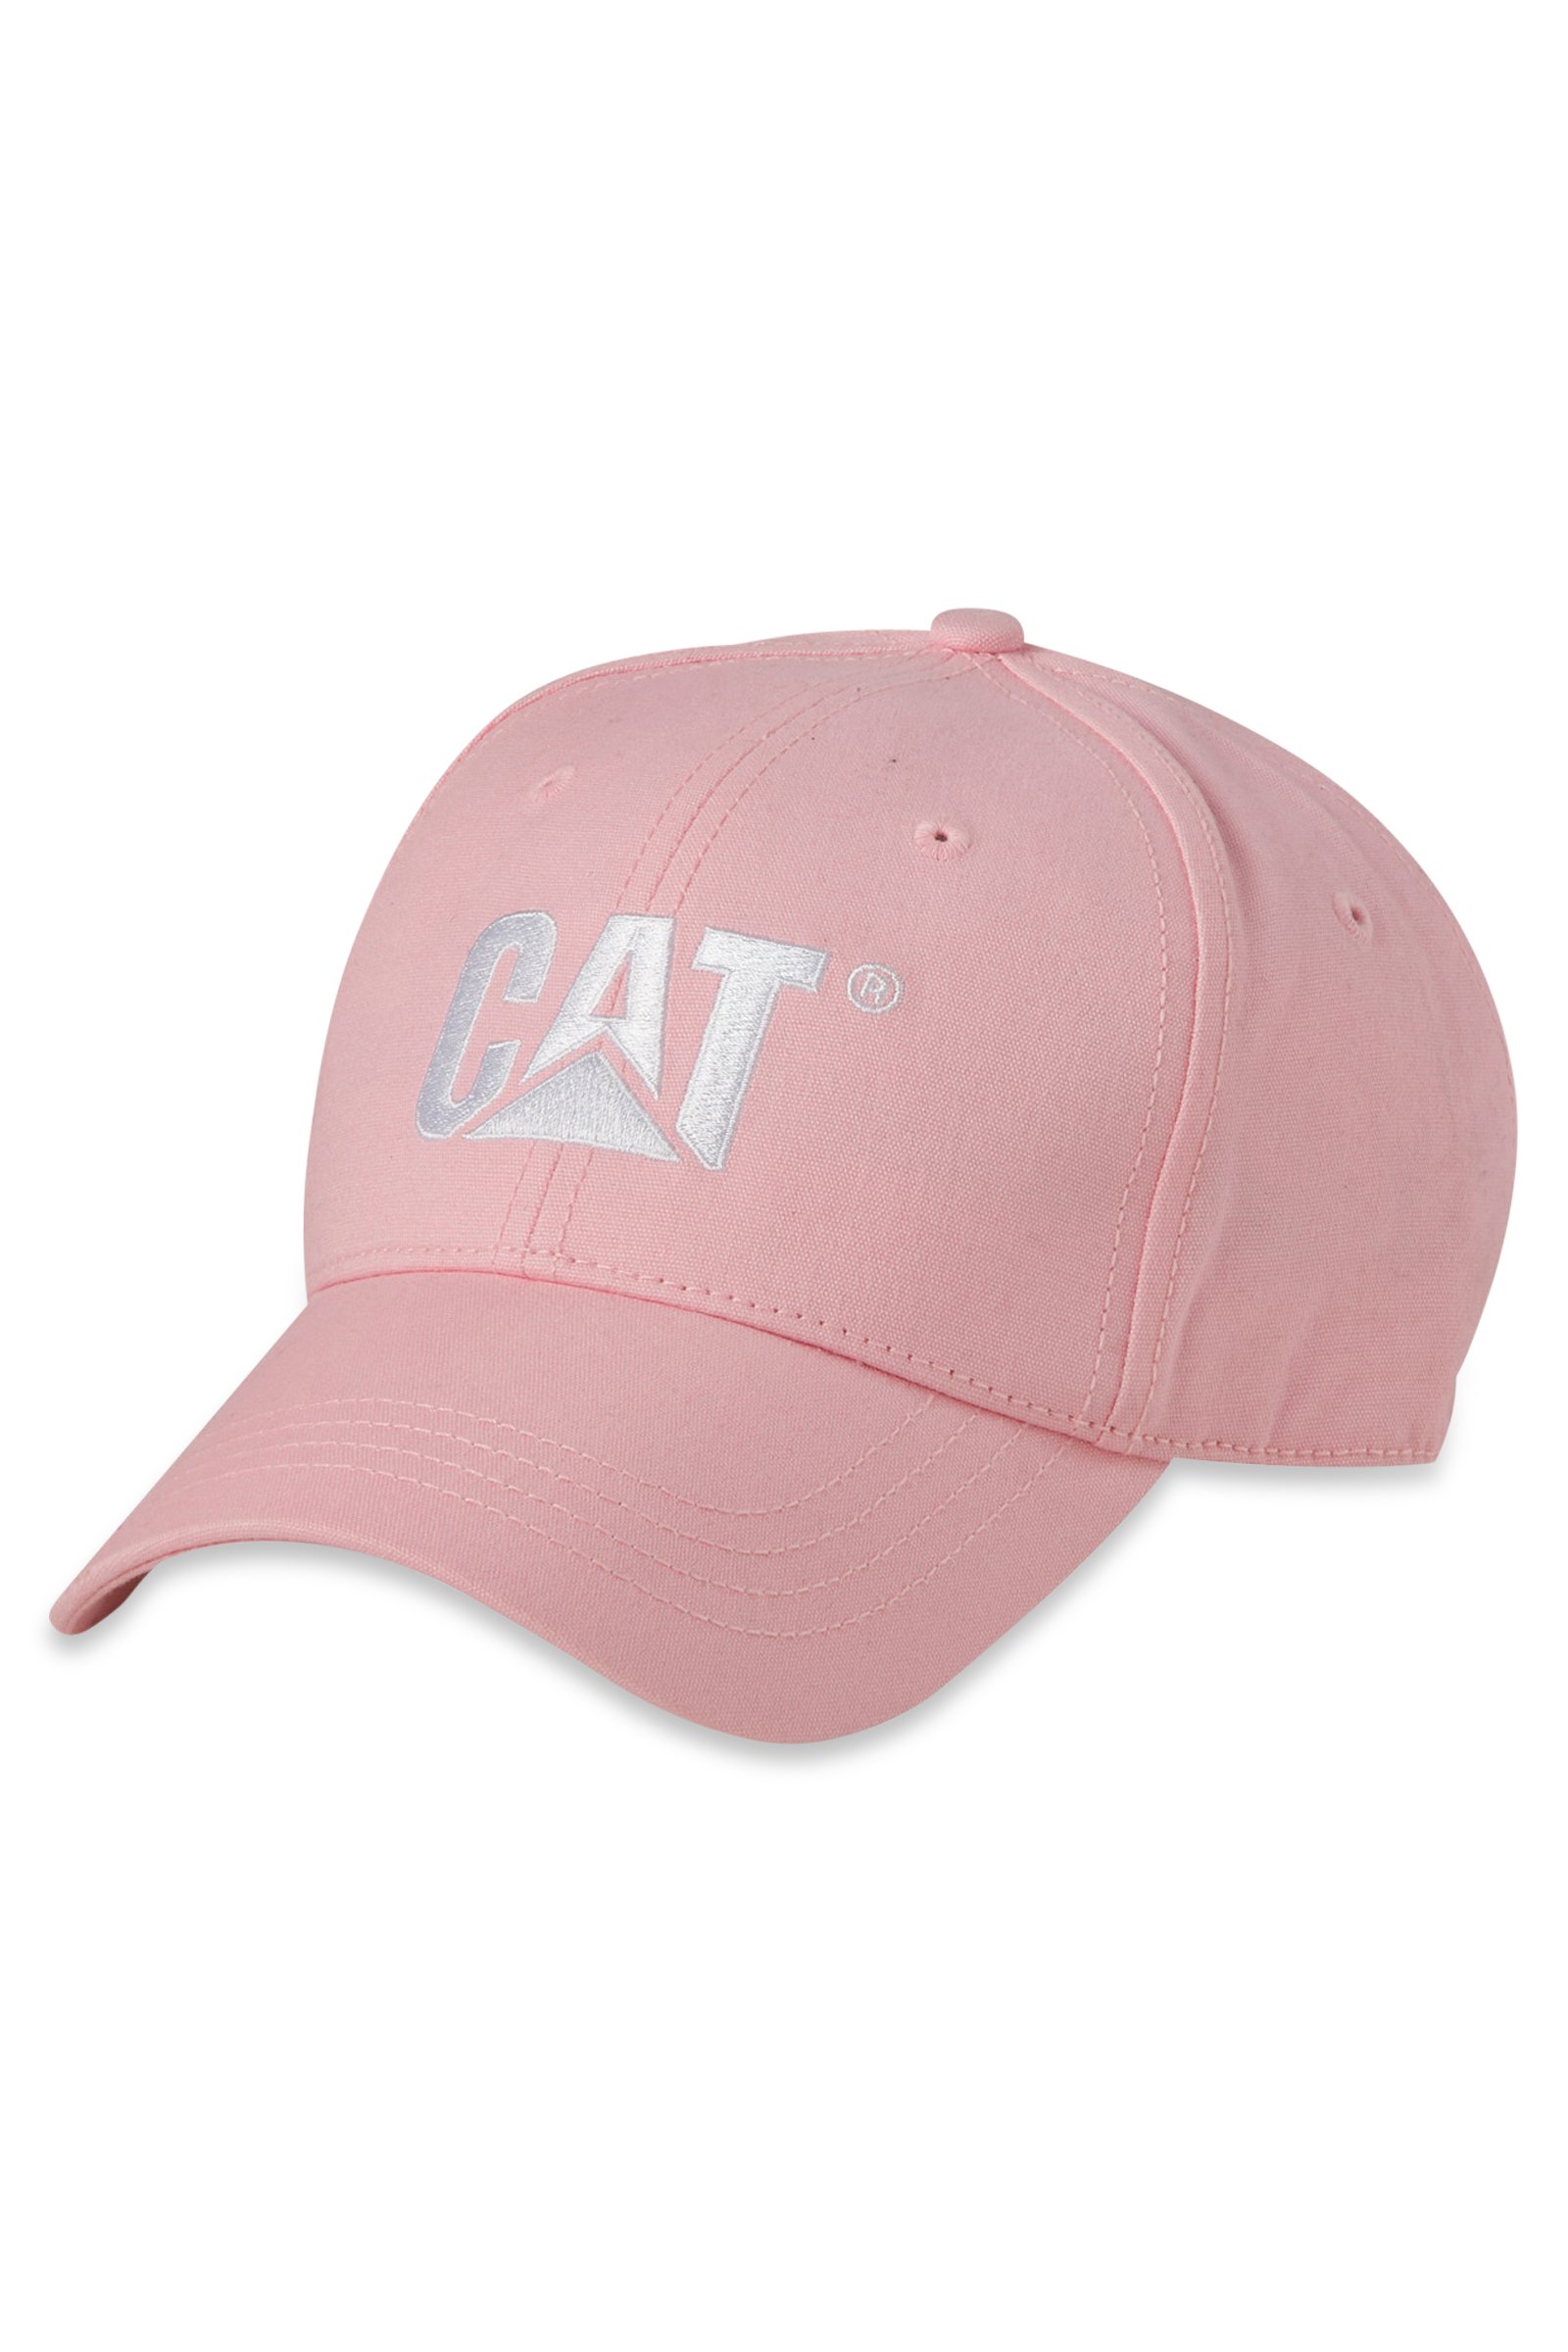 Hats for Work, Shop Work Hats Online